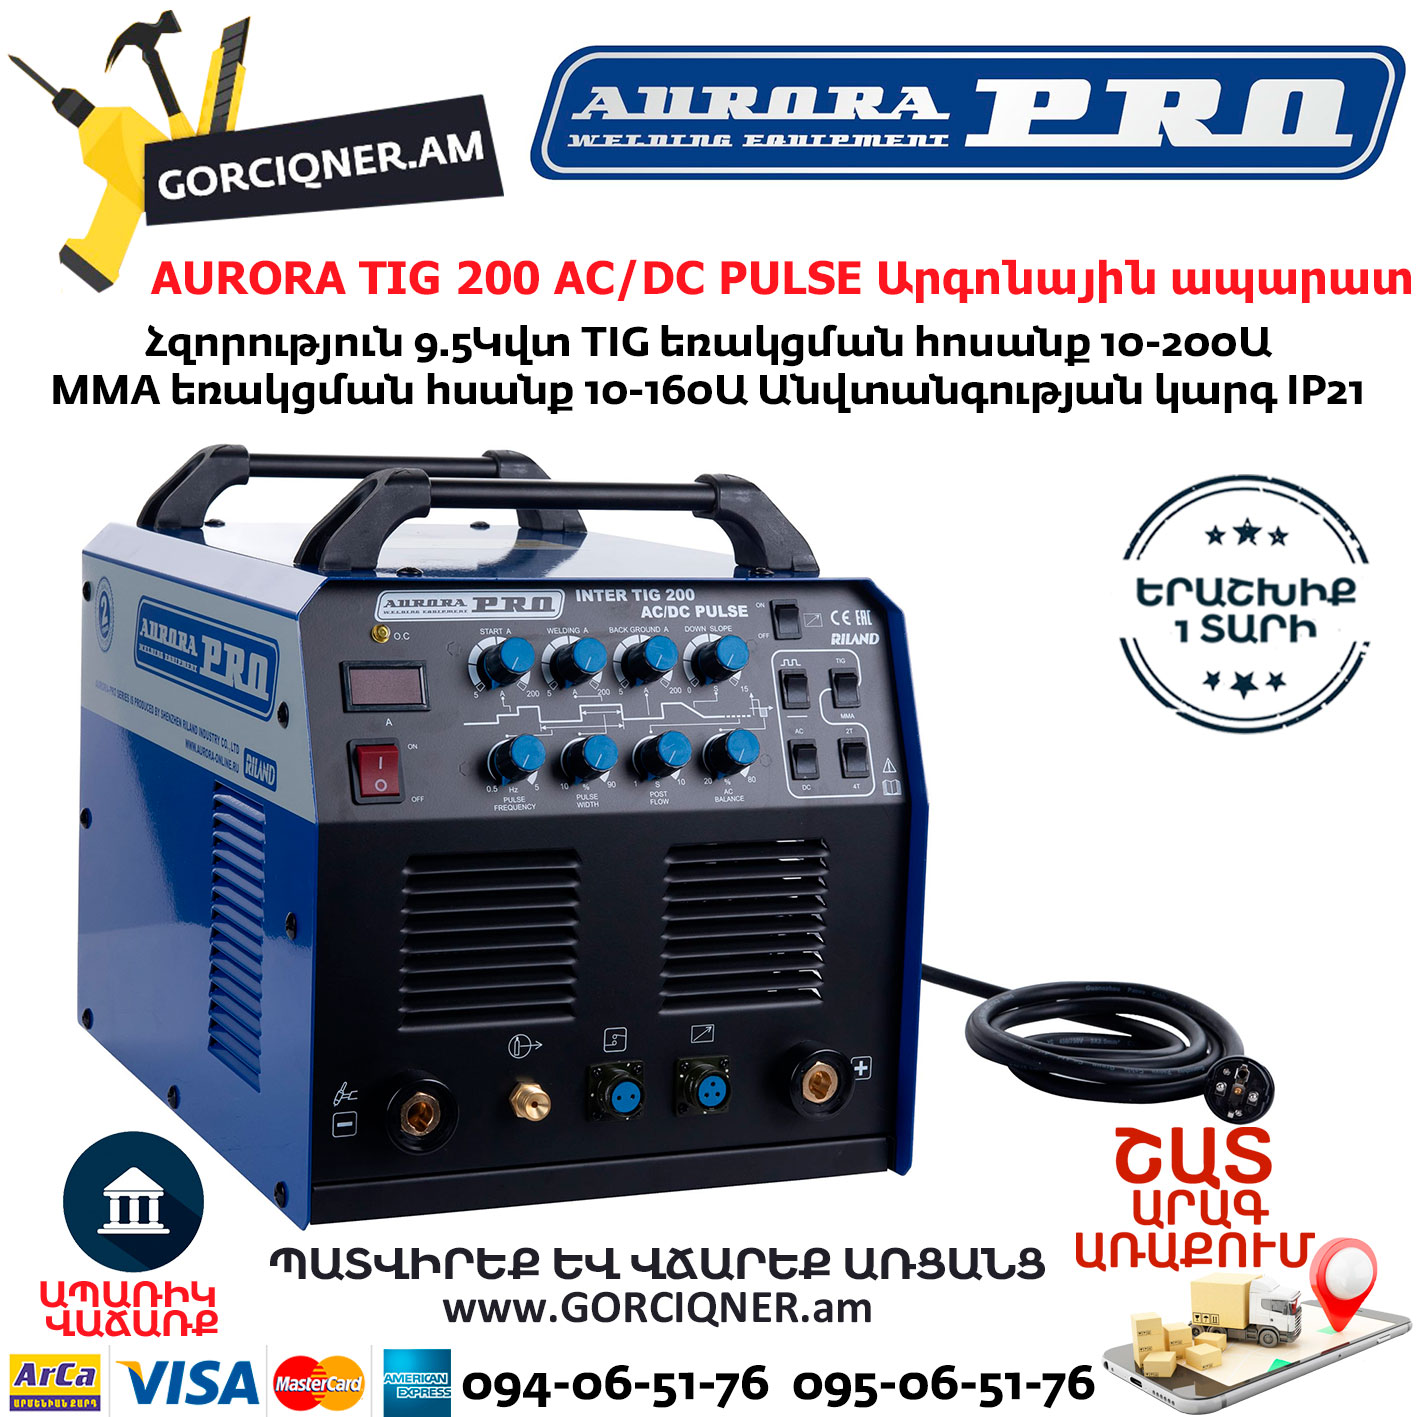 Pro inter tig 200 pulse. Aurora Pro Inter Tig 200 AC/DC Pulse. Inter Tig 200 AC DC.